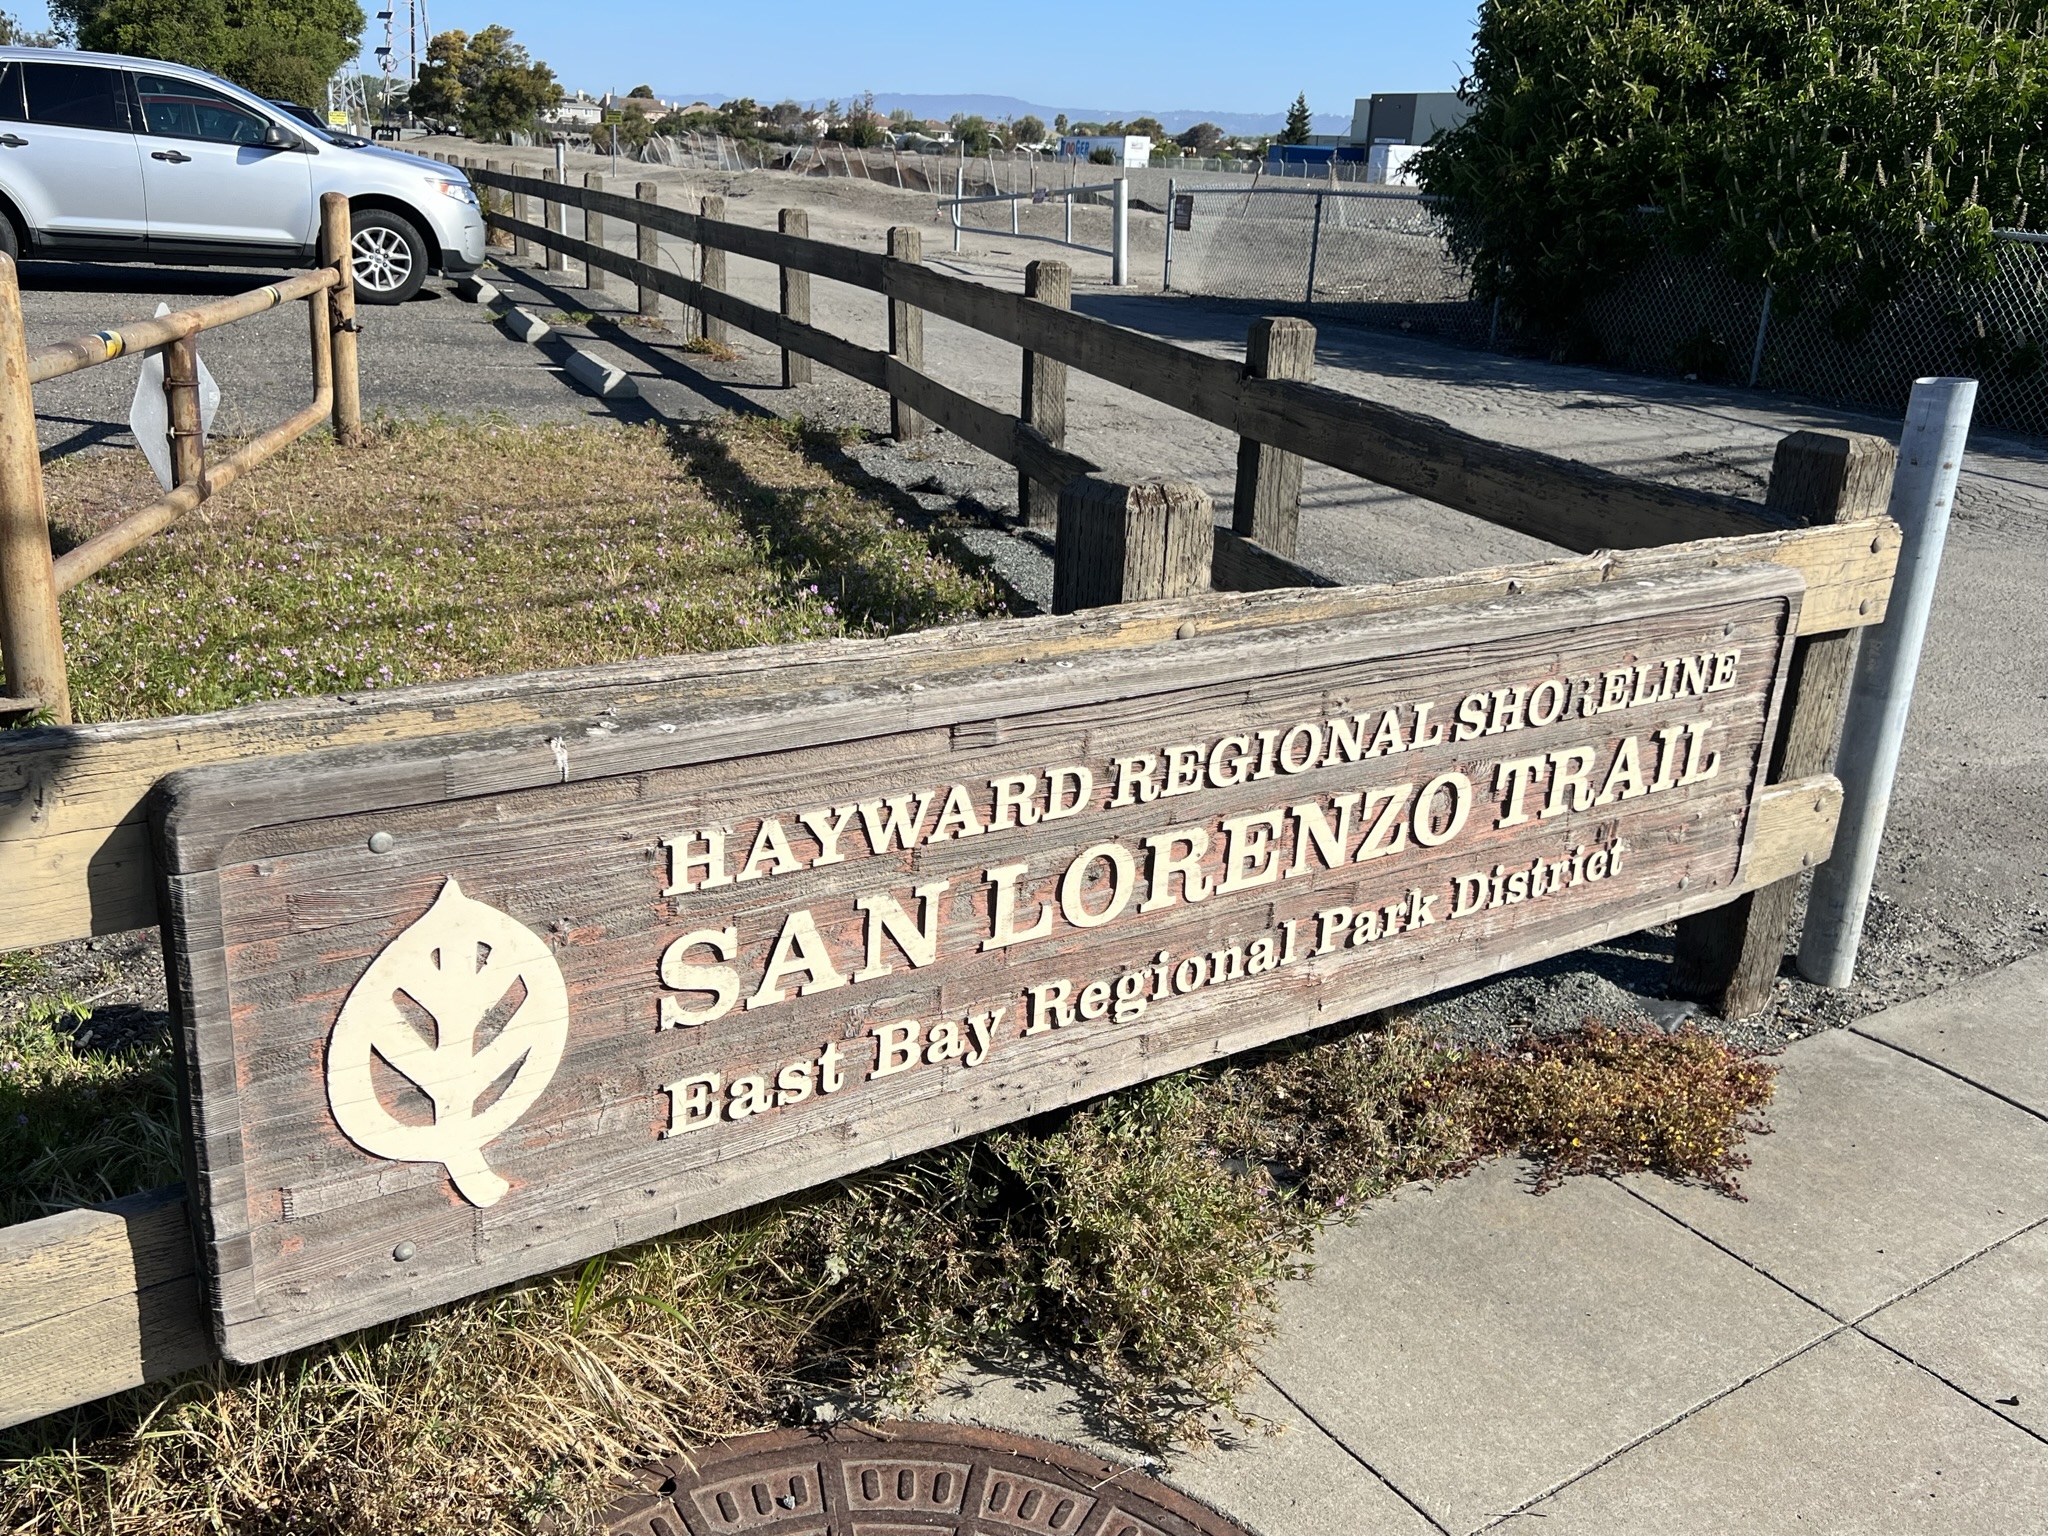 走的是Hayward Regional Shoreline，在San Lorenzo Trail停车场停的车